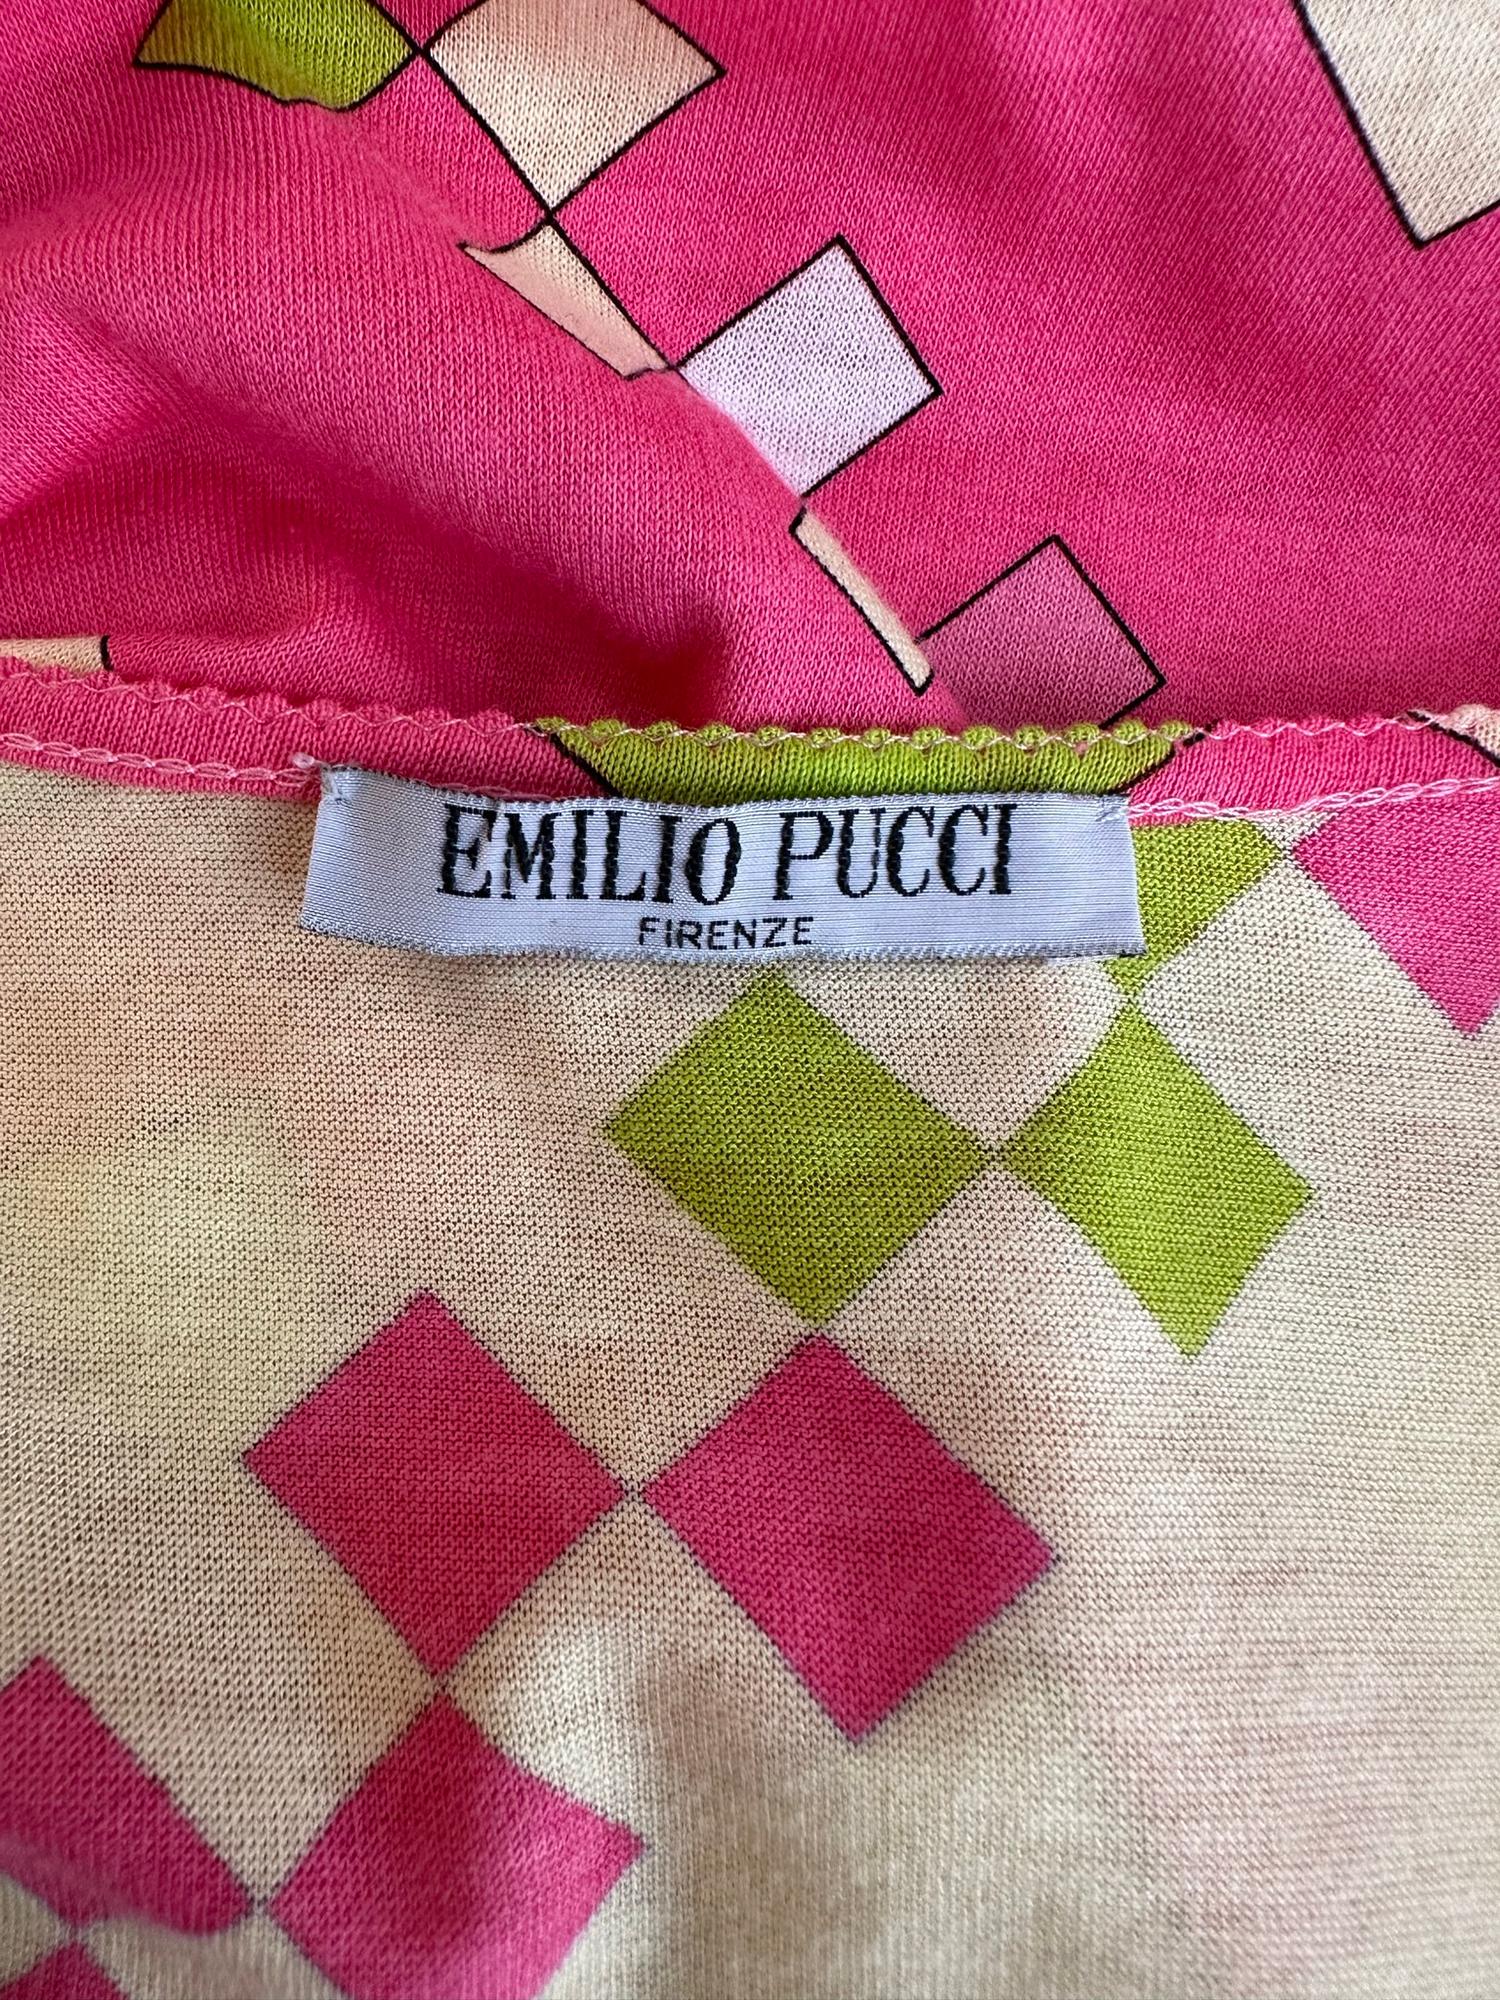 Emilio Pucci Fine Cotton & Silk Knit V Neck Button Front Cardigan Sweater 8 For Sale 7